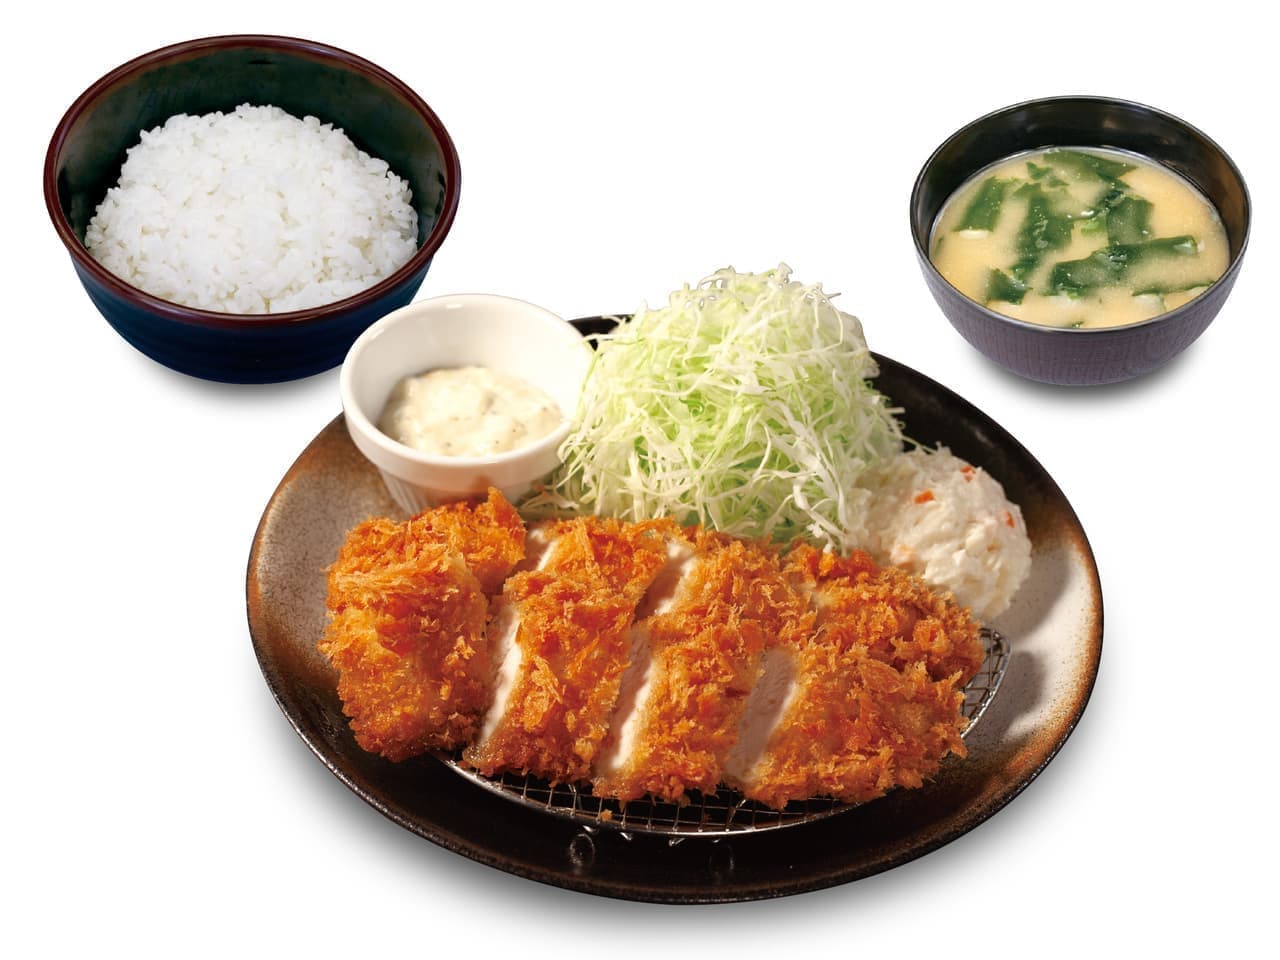 Matsunoya "Sasami Katsu set meal topped with potato salad